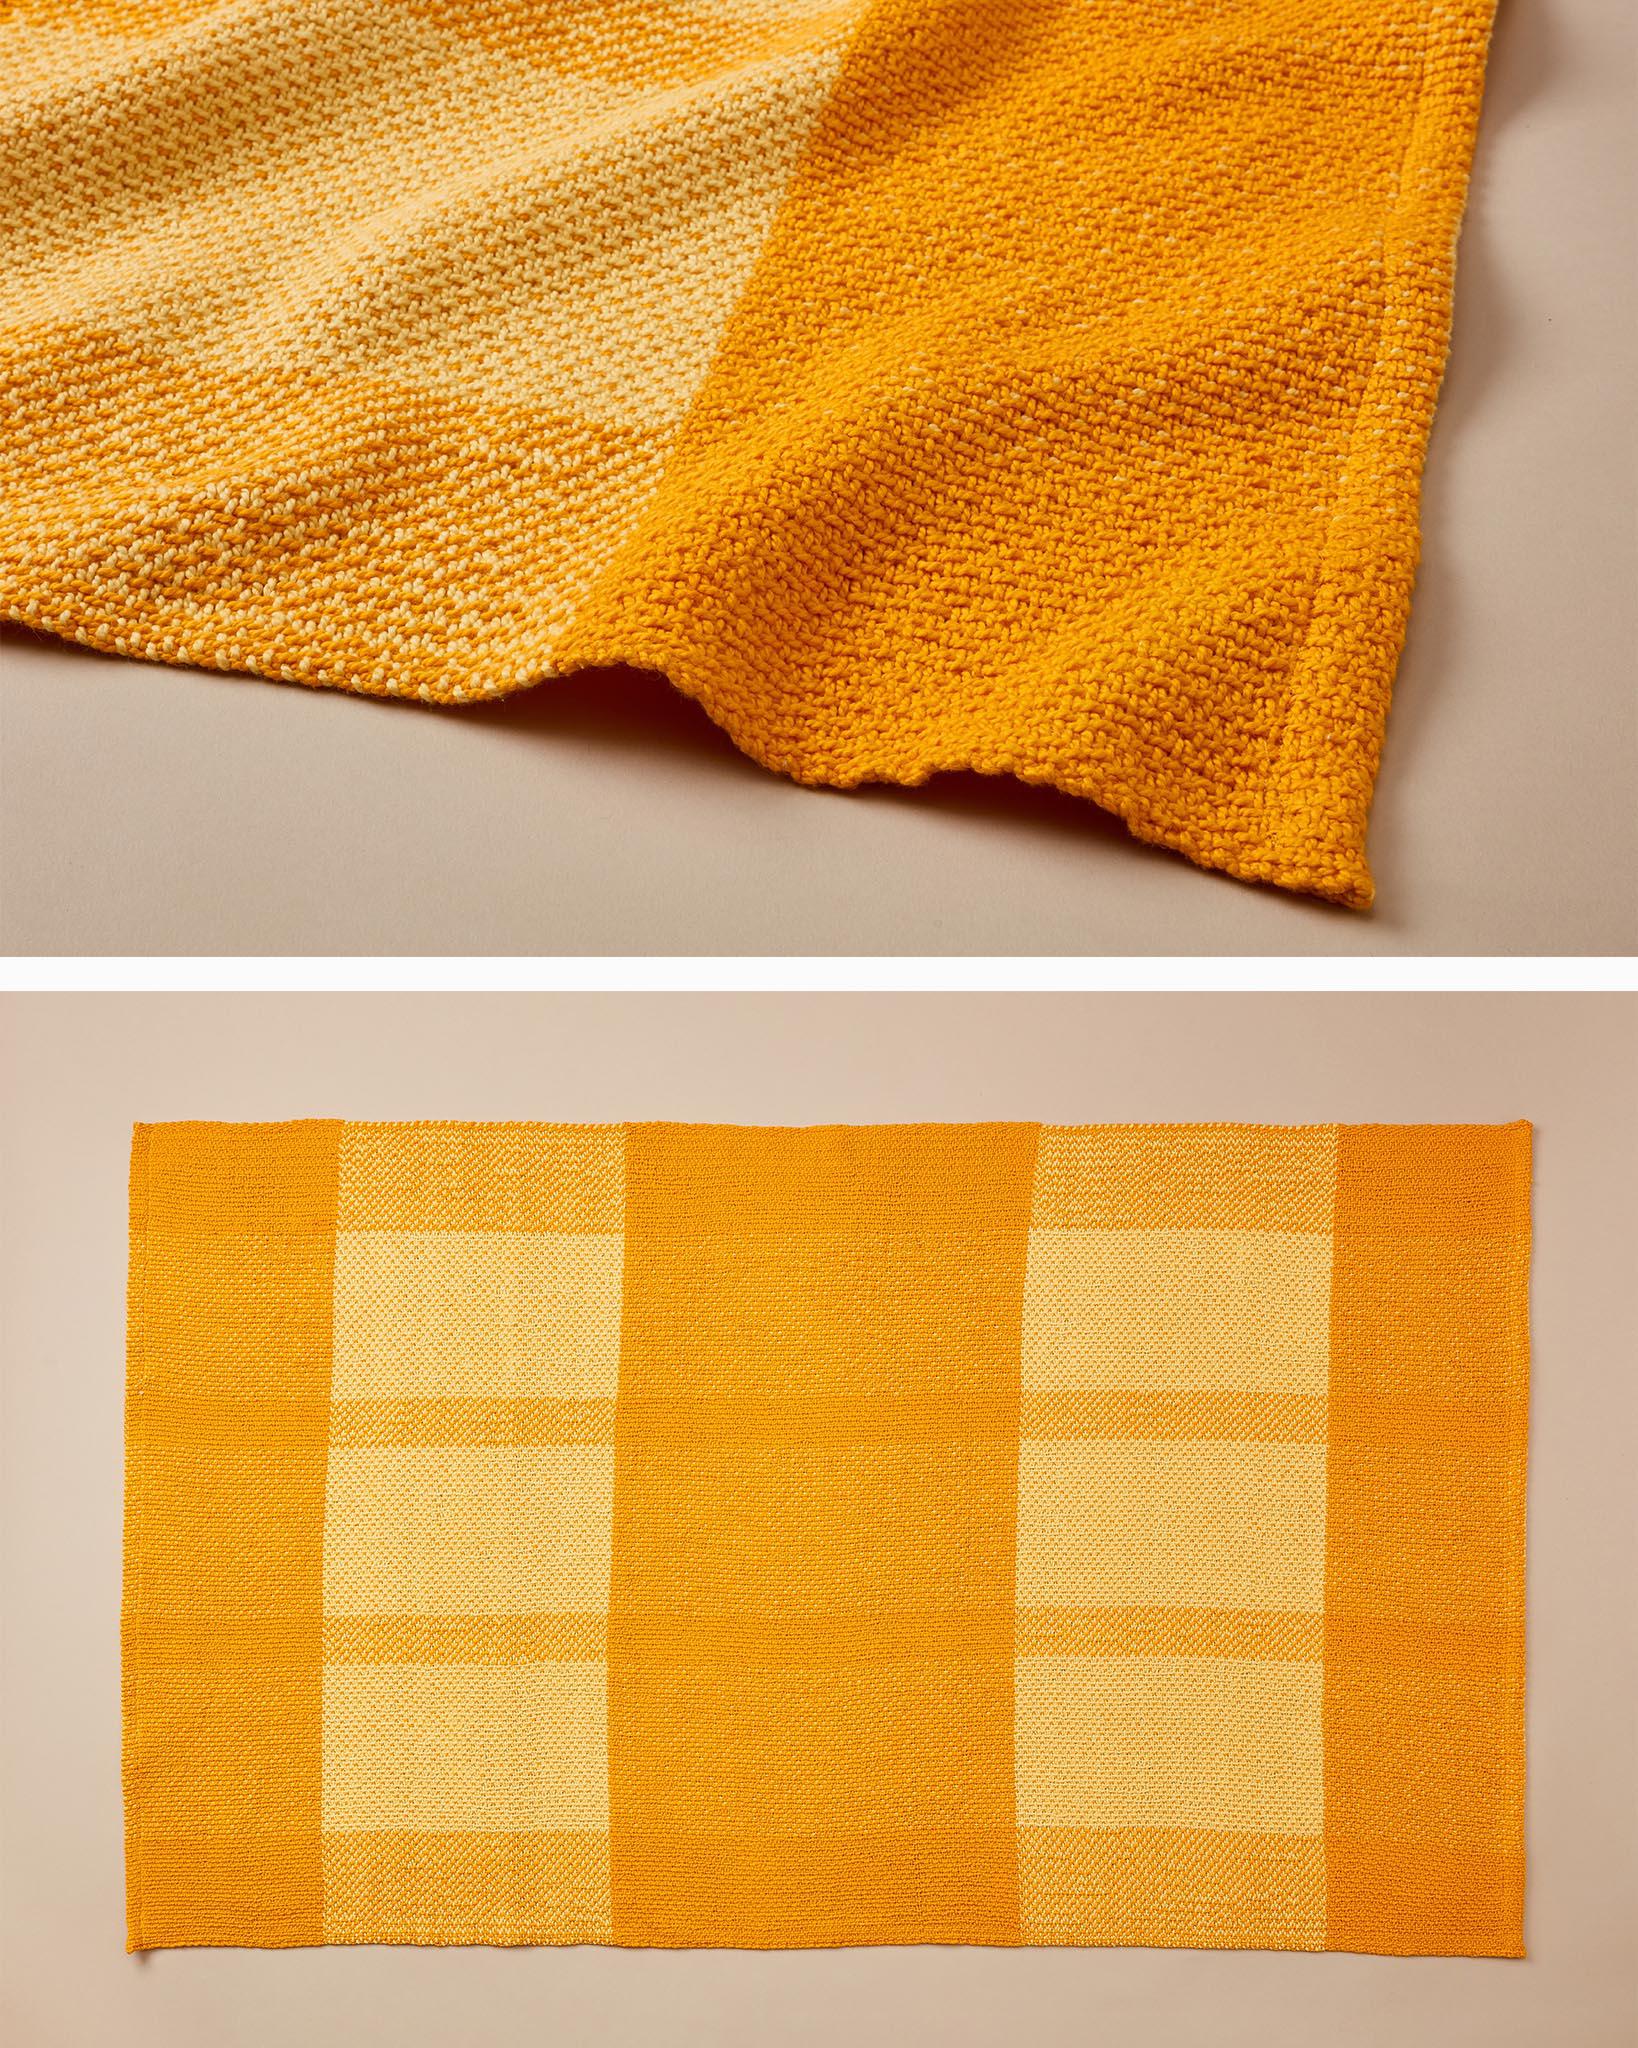 Linen Bath Towels: Harmony by Gradation v1 — The Weaving Mill